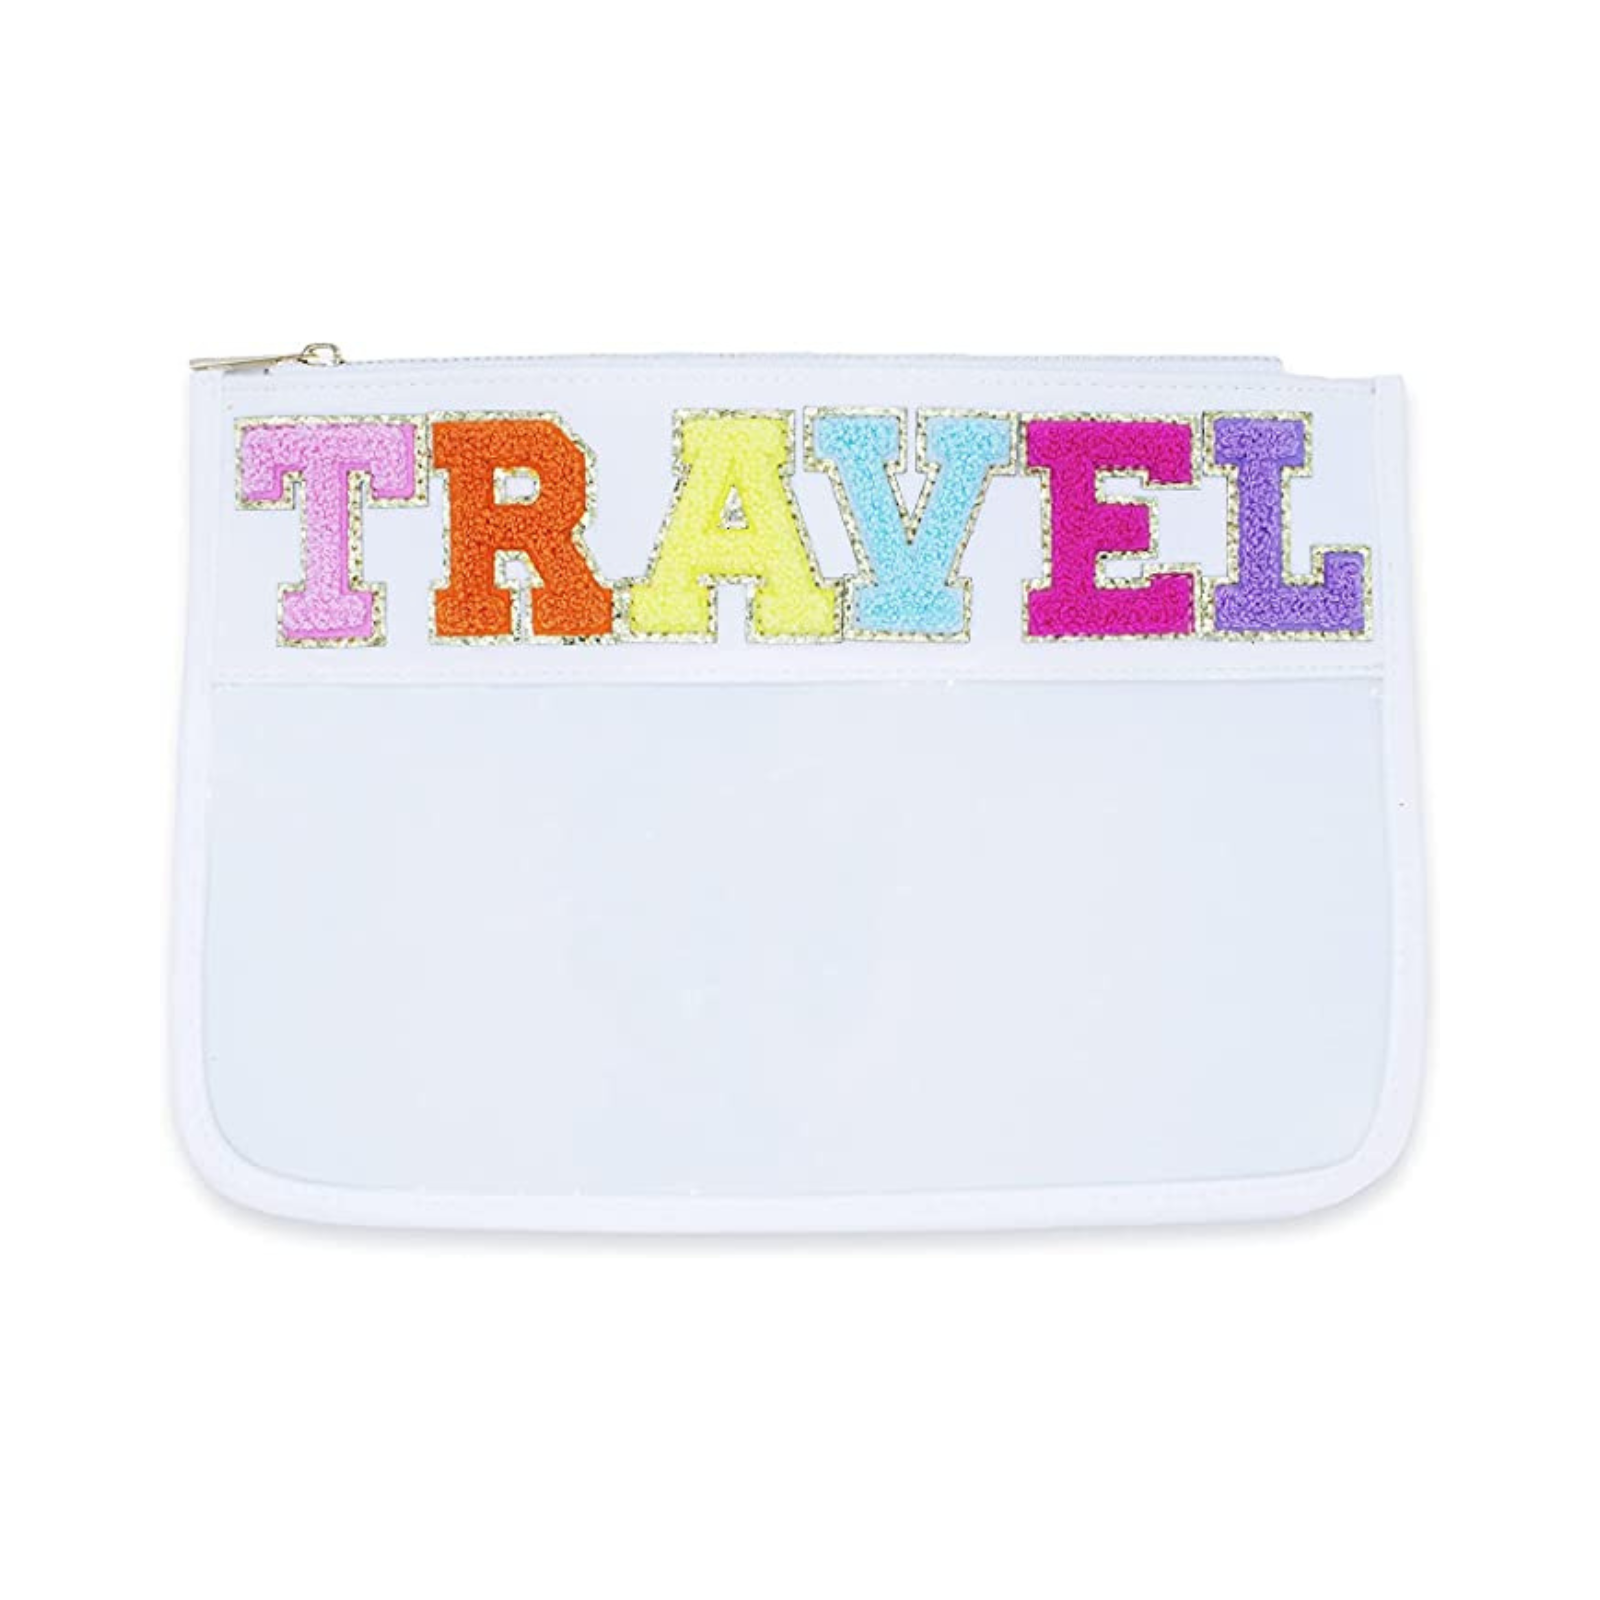 Travel Bag (White + Clear Plastic)